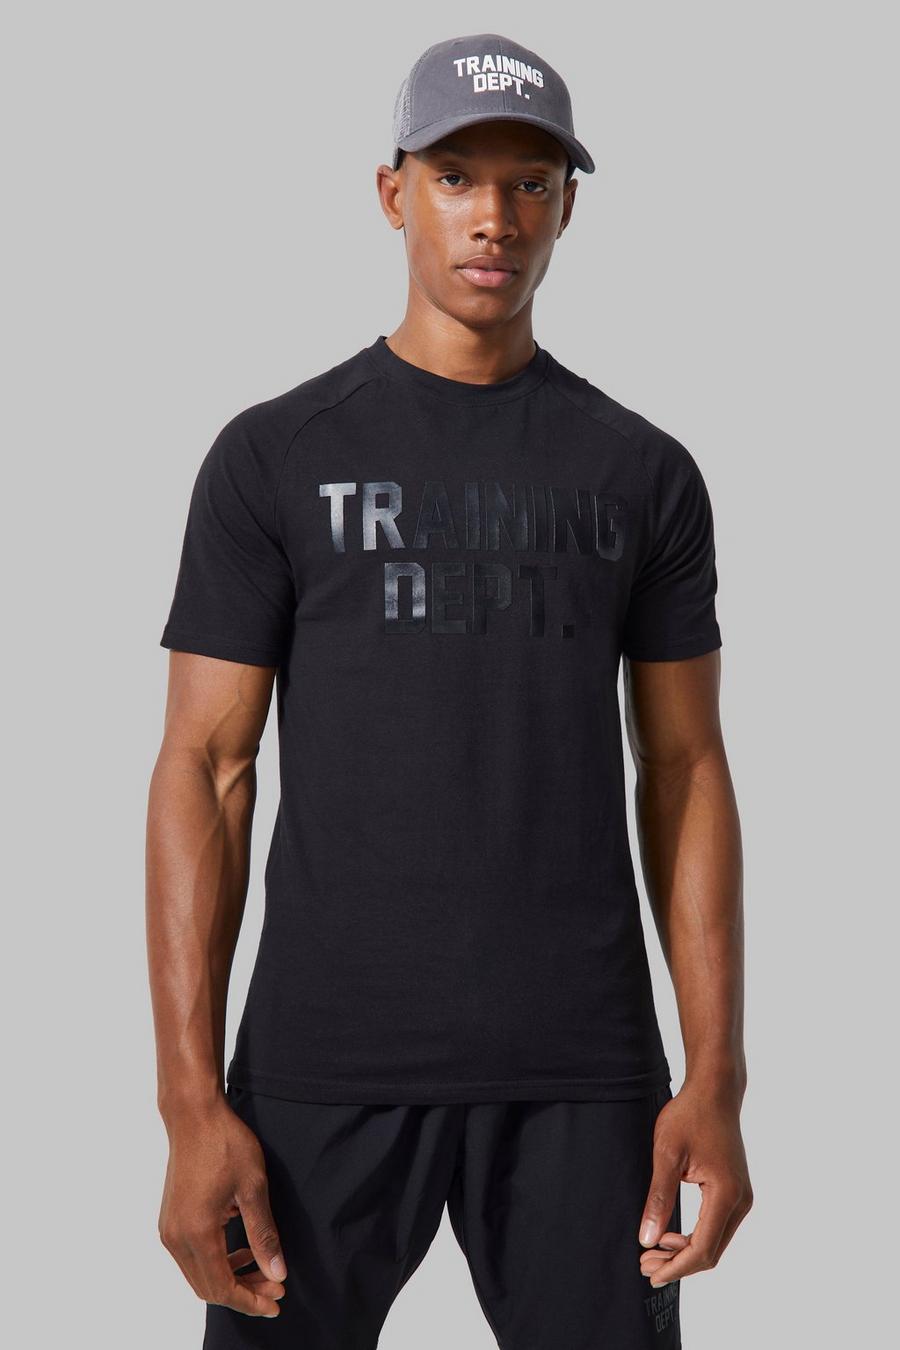 Black Man Active Muscle Fit Training Dept T Shirt